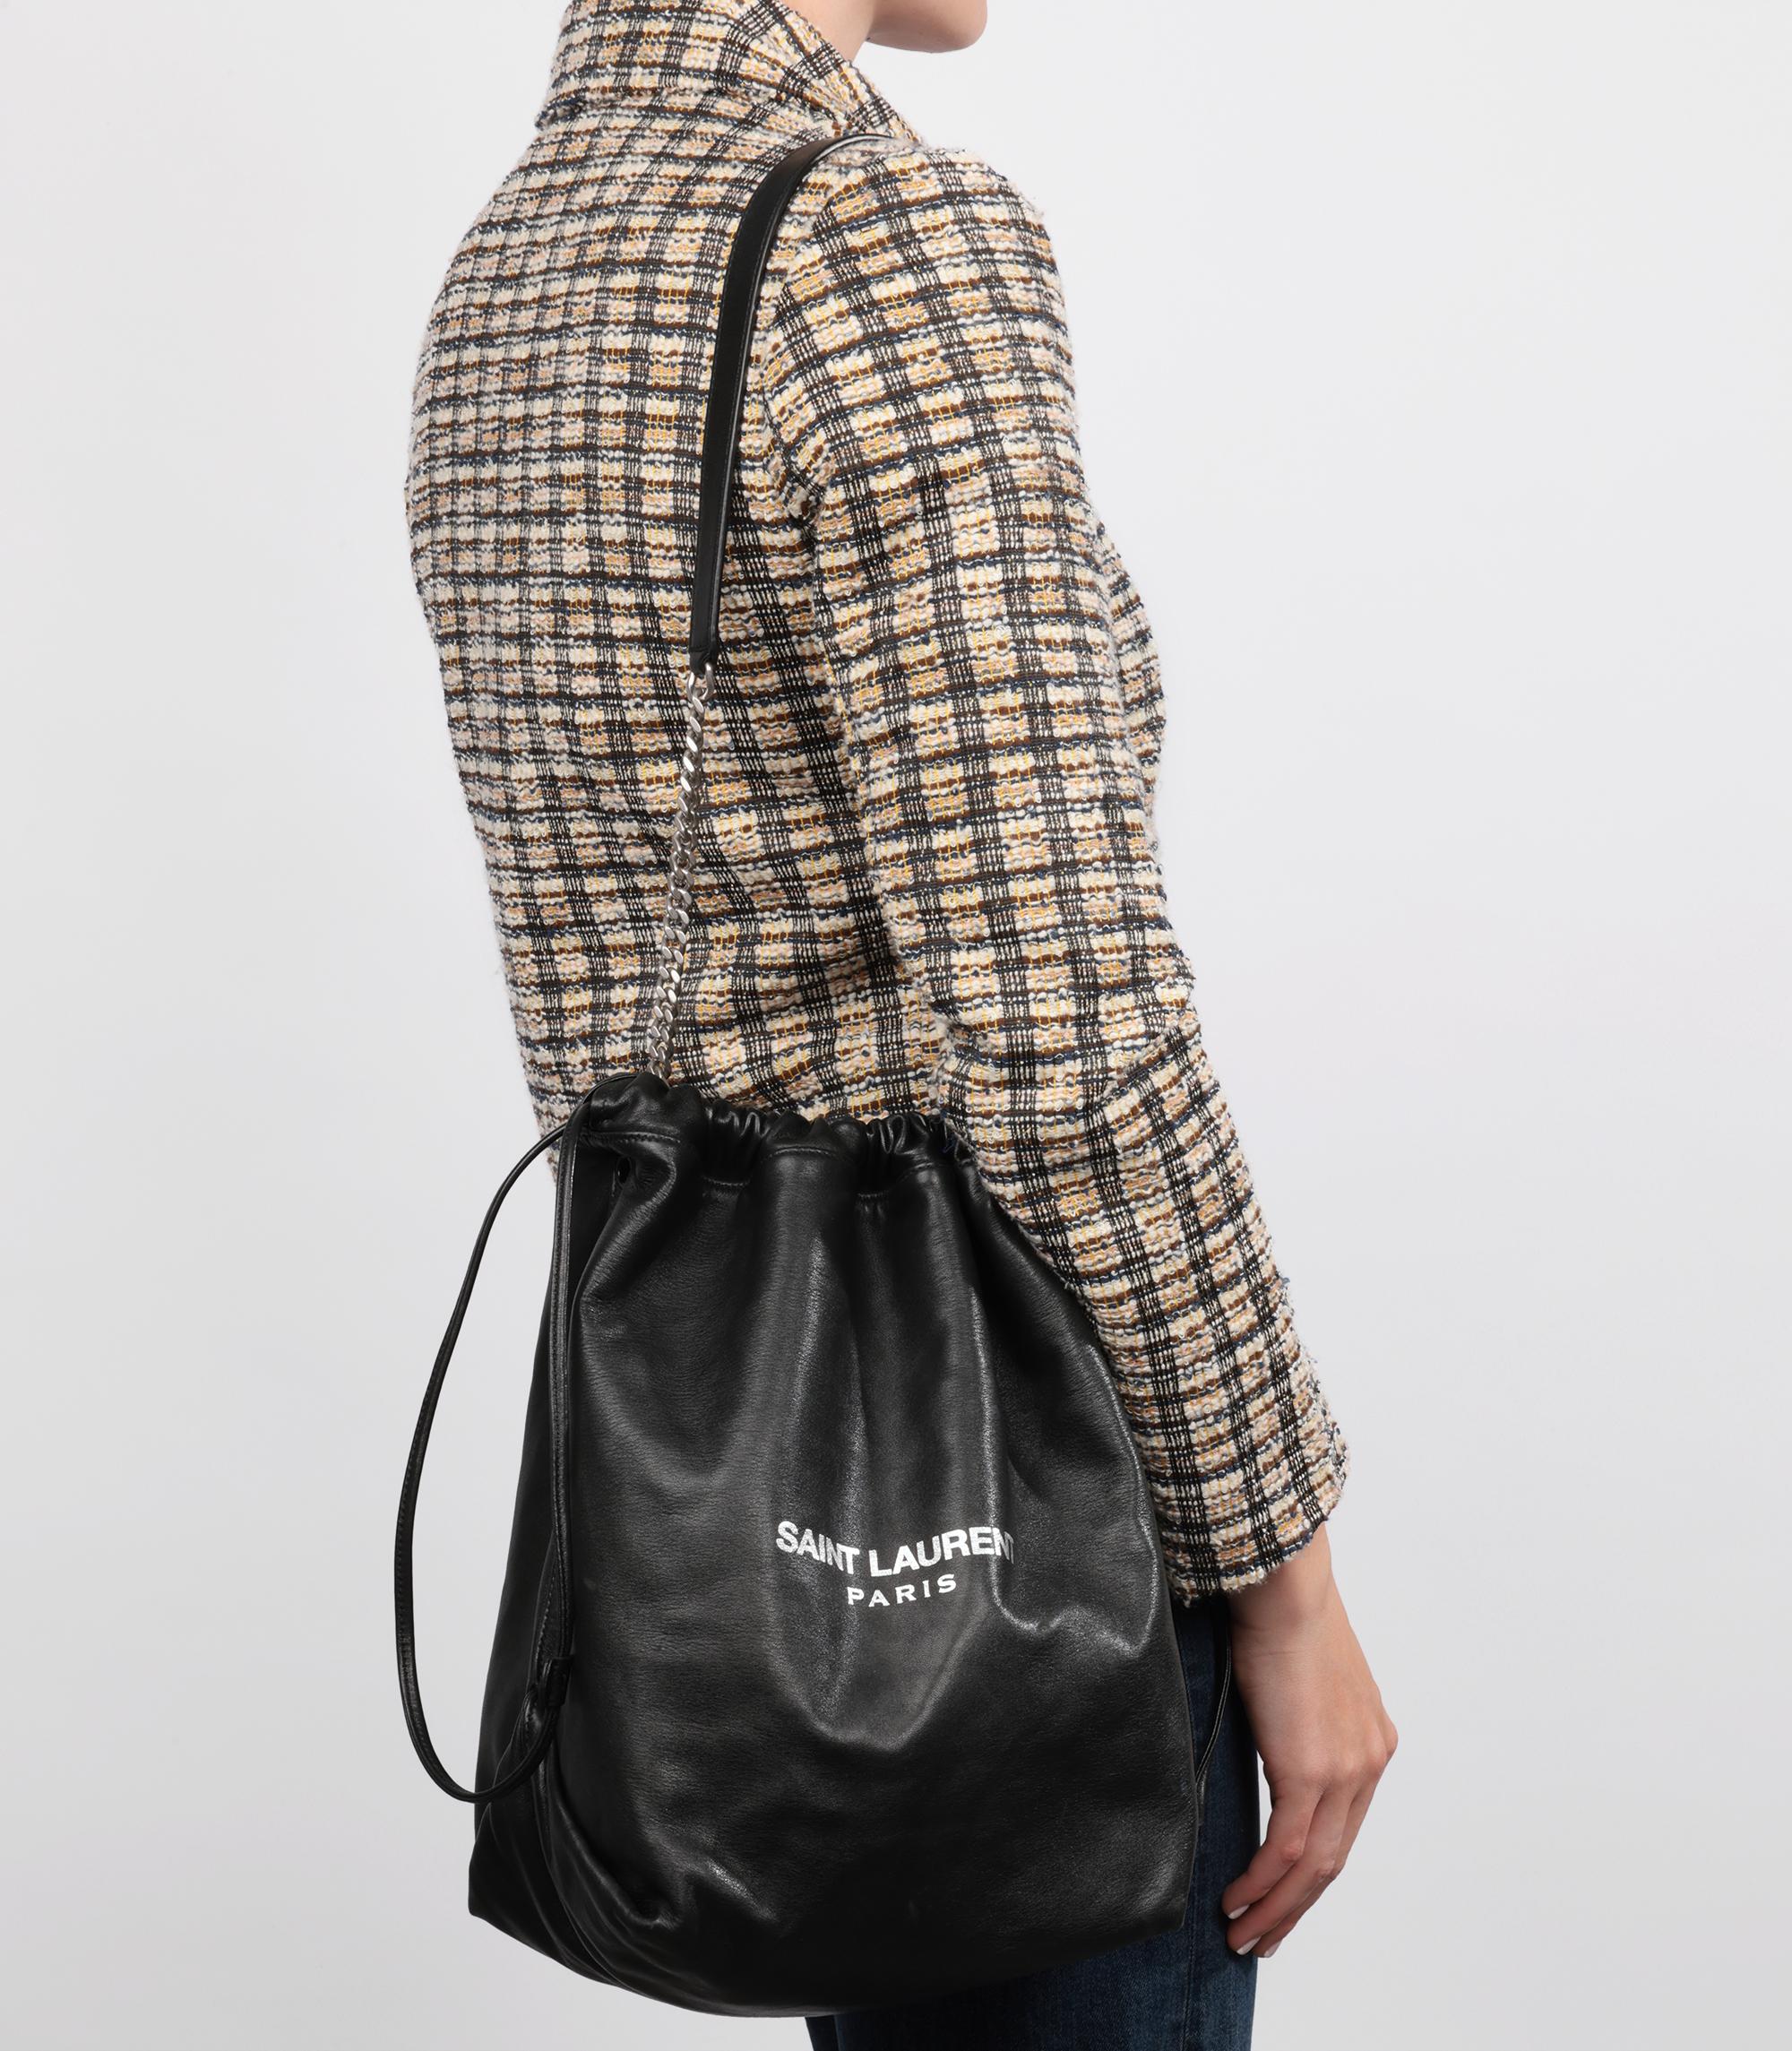 Saint Laurent Black Lambskin Teddy Bucket Bag With Pouch

Brand- Saint Laurent
Model- Teddy Bucket Bag
Product Type- Crossbody, Shoulder
Serial Number- YS*************
Age- Circa 2018
Accompanied By- Saint Laurent Dust Bag, Care Booklet, Interior